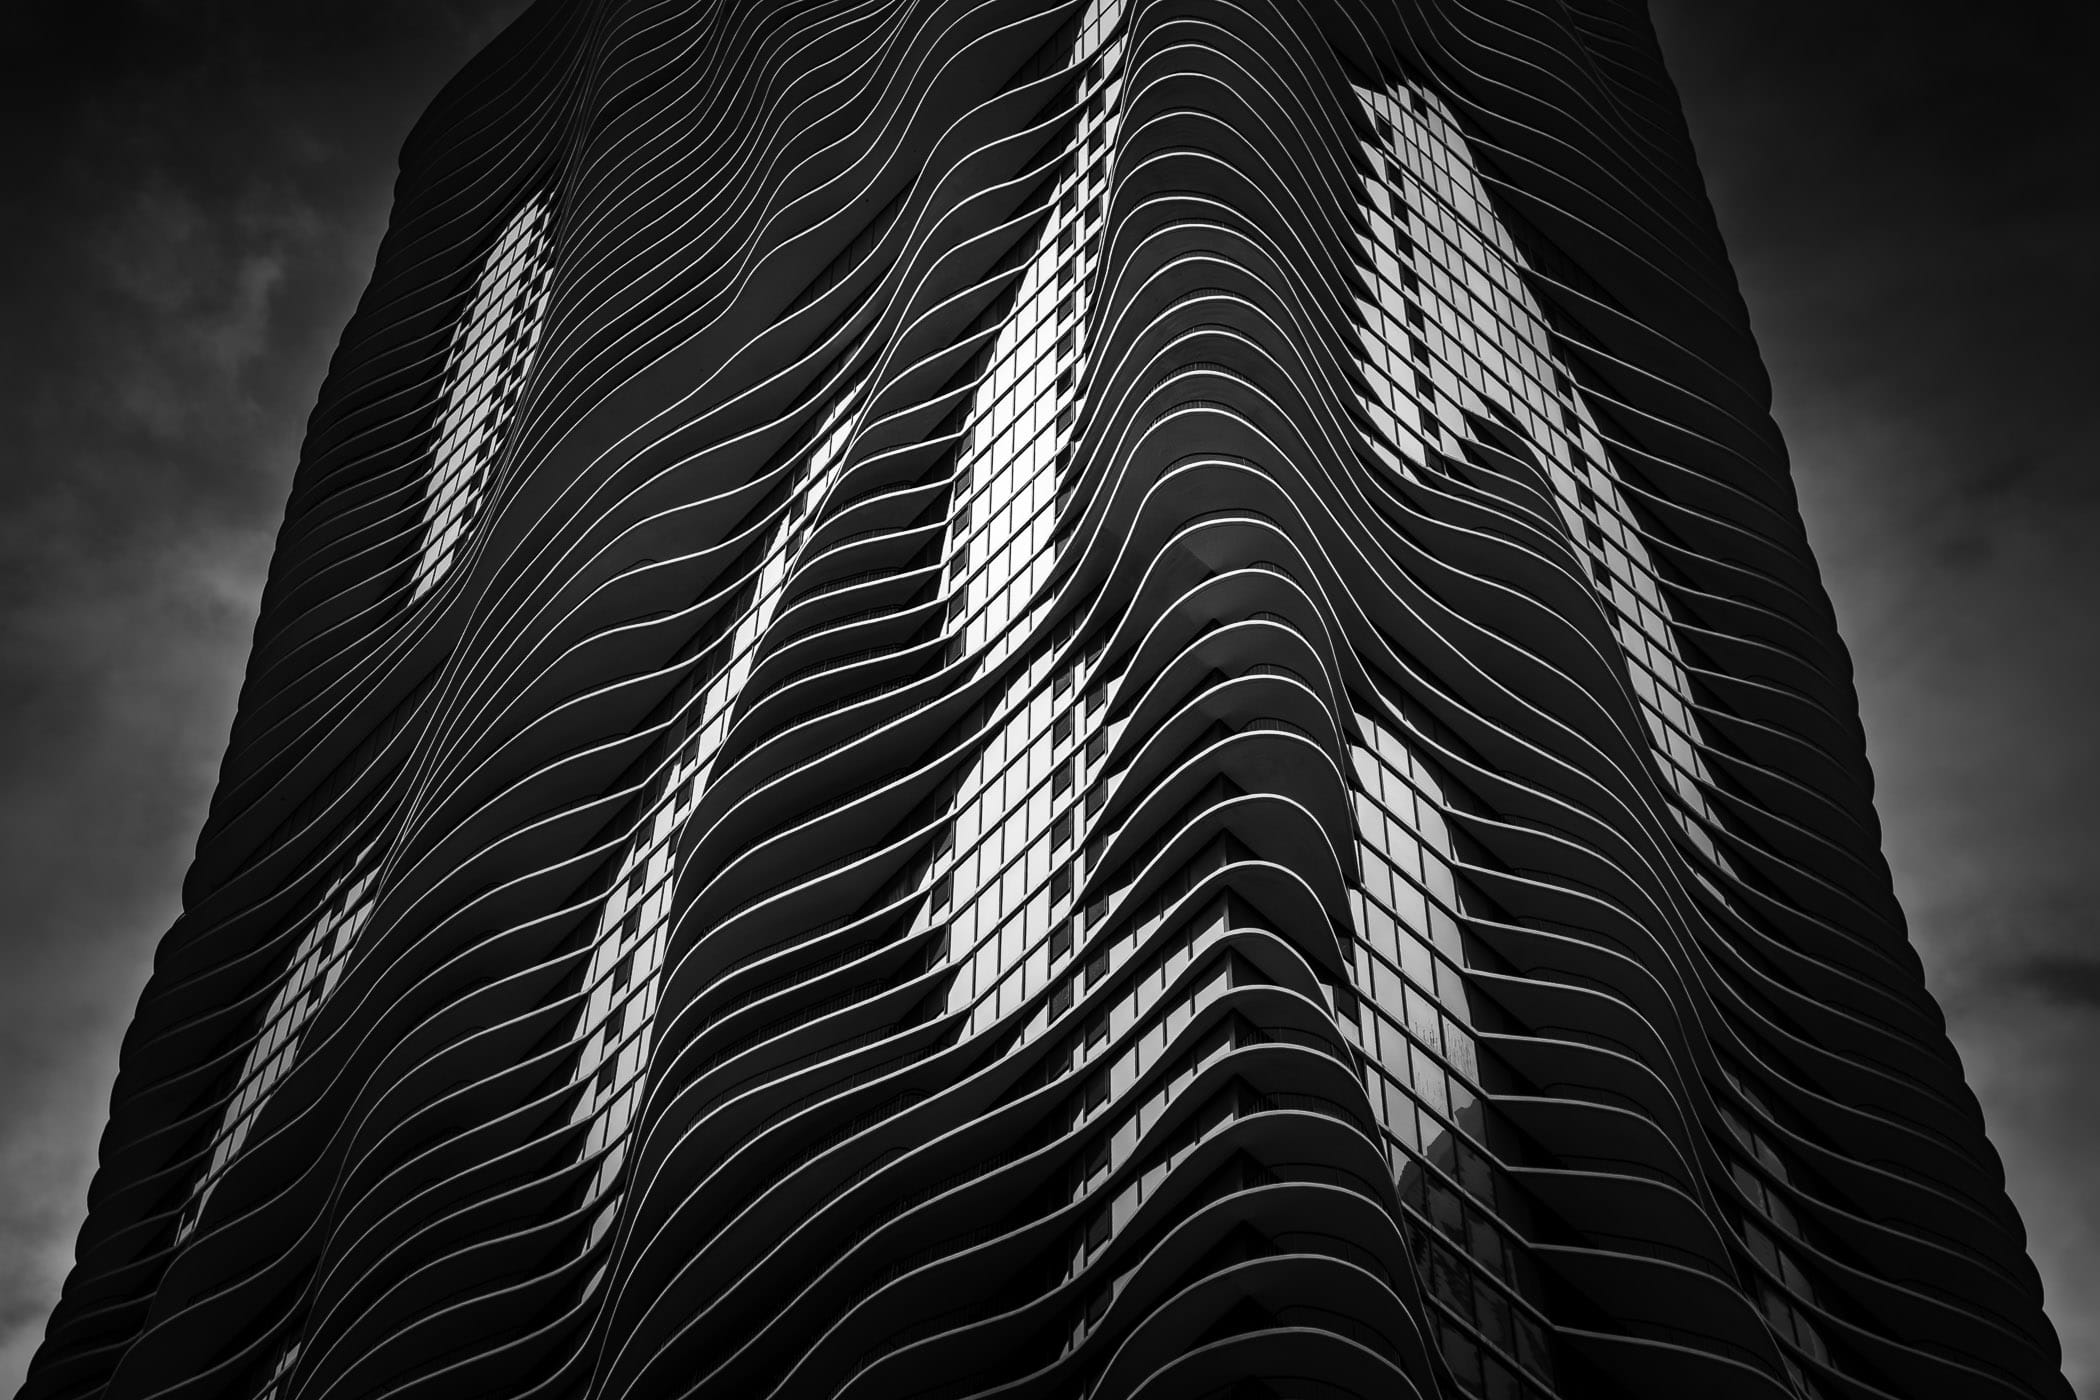 Abstract detail of Chicago's Aqua skyscraper.